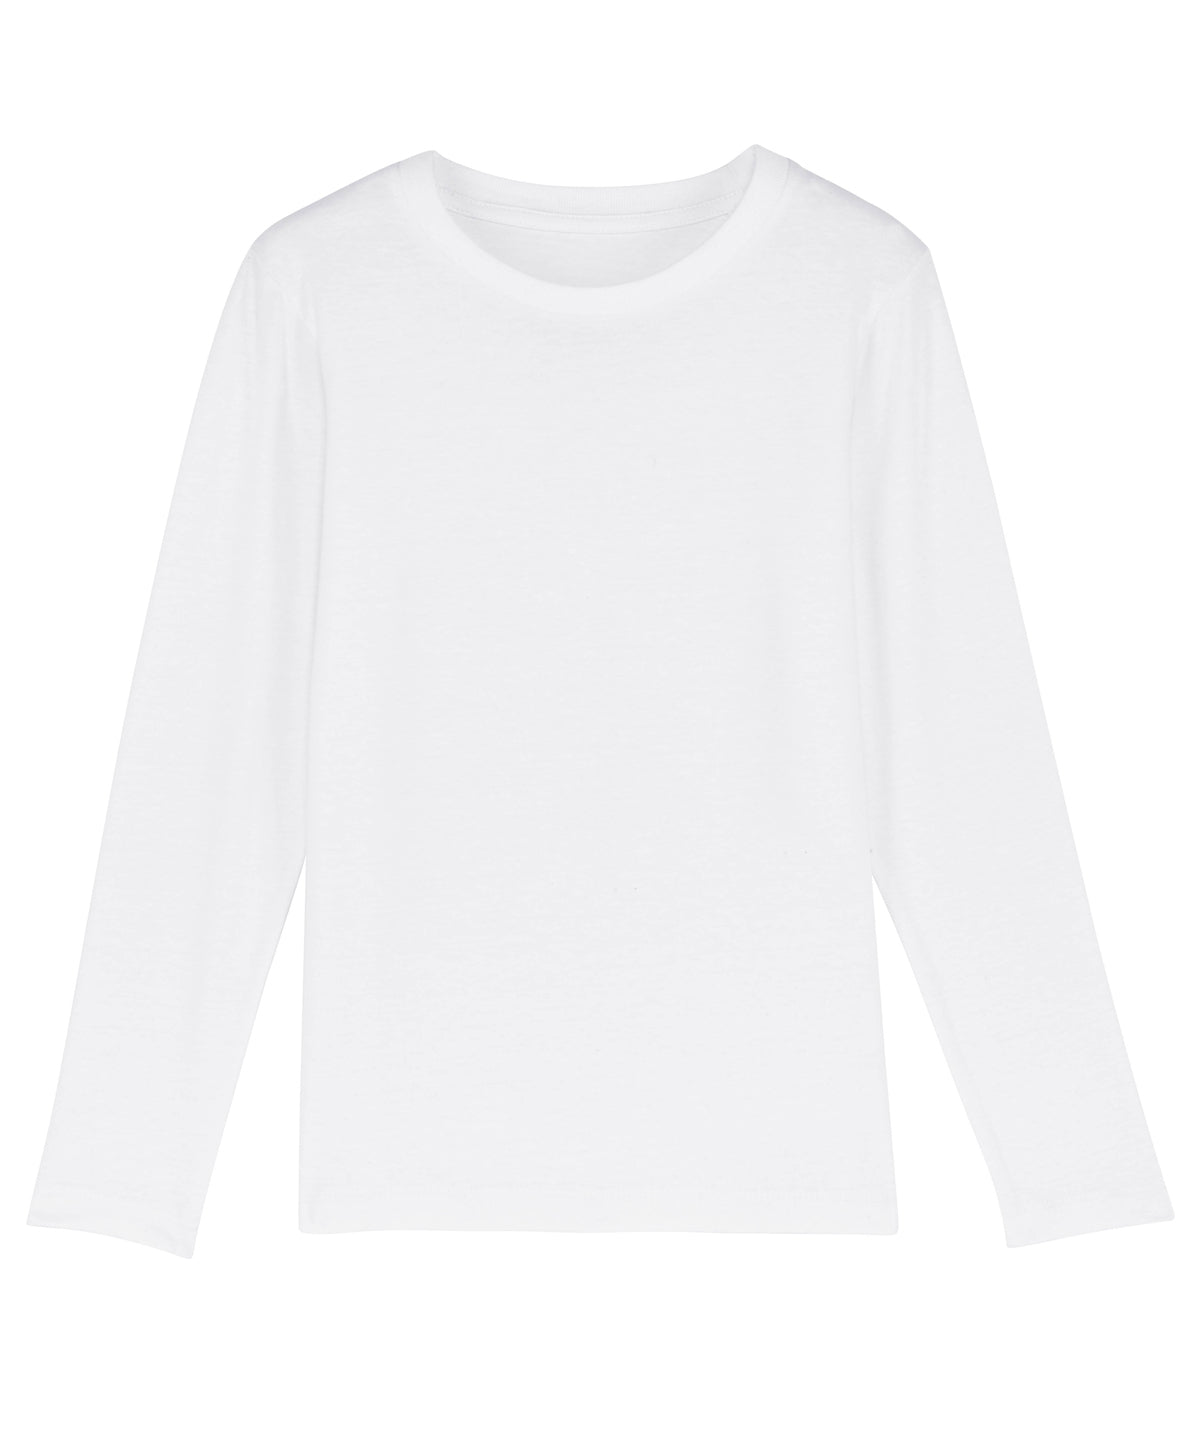 Stanley/Stella Mini Hopper Long Sleeve Kids T-Shirt